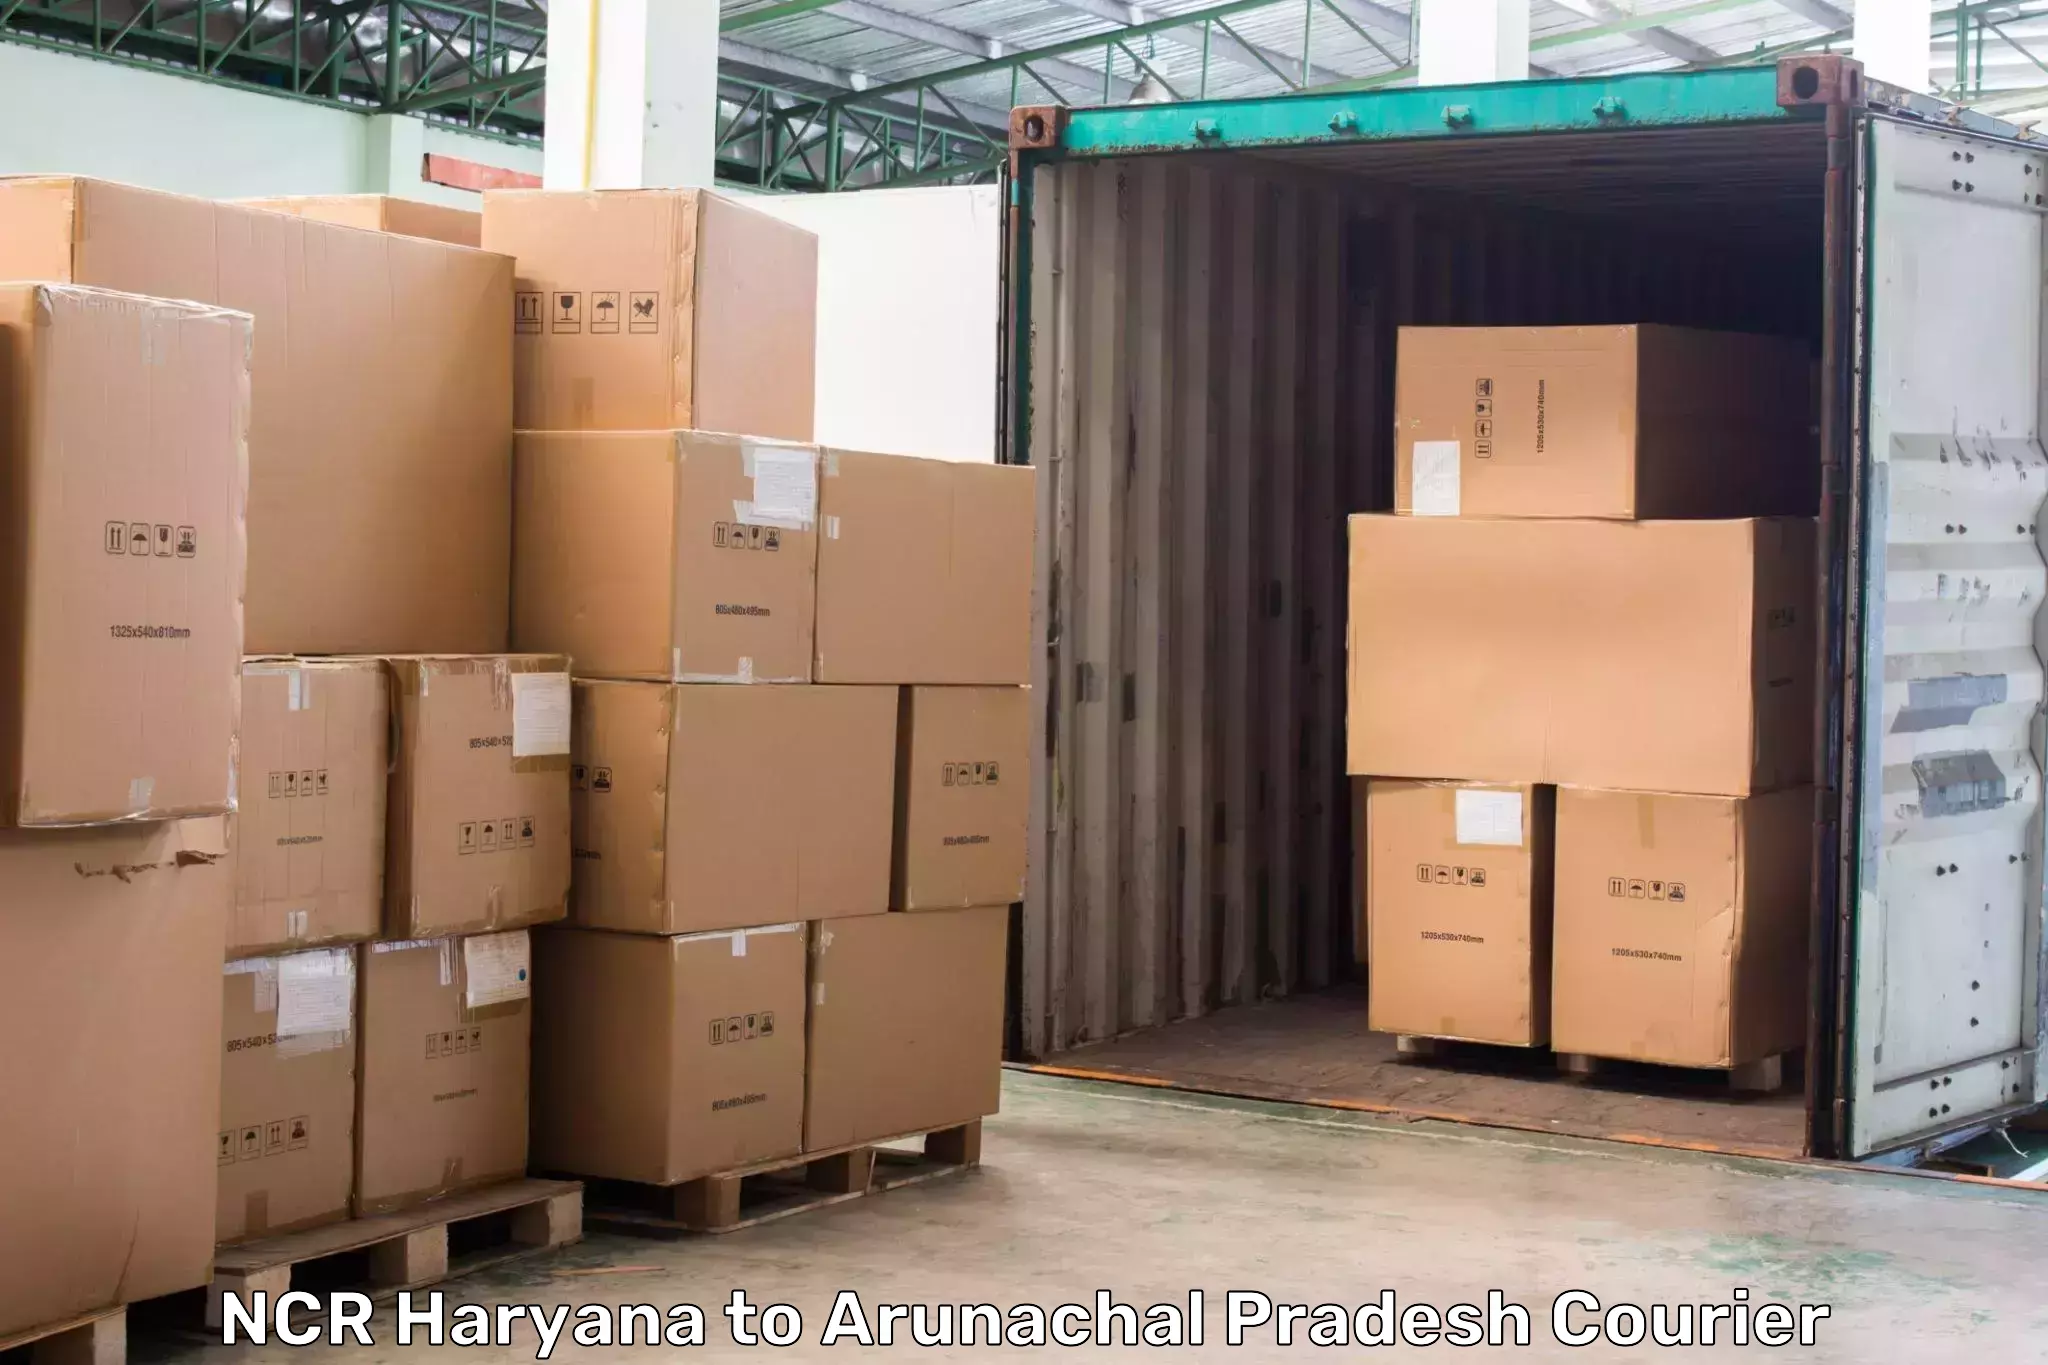 Express delivery network NCR Haryana to Yazali